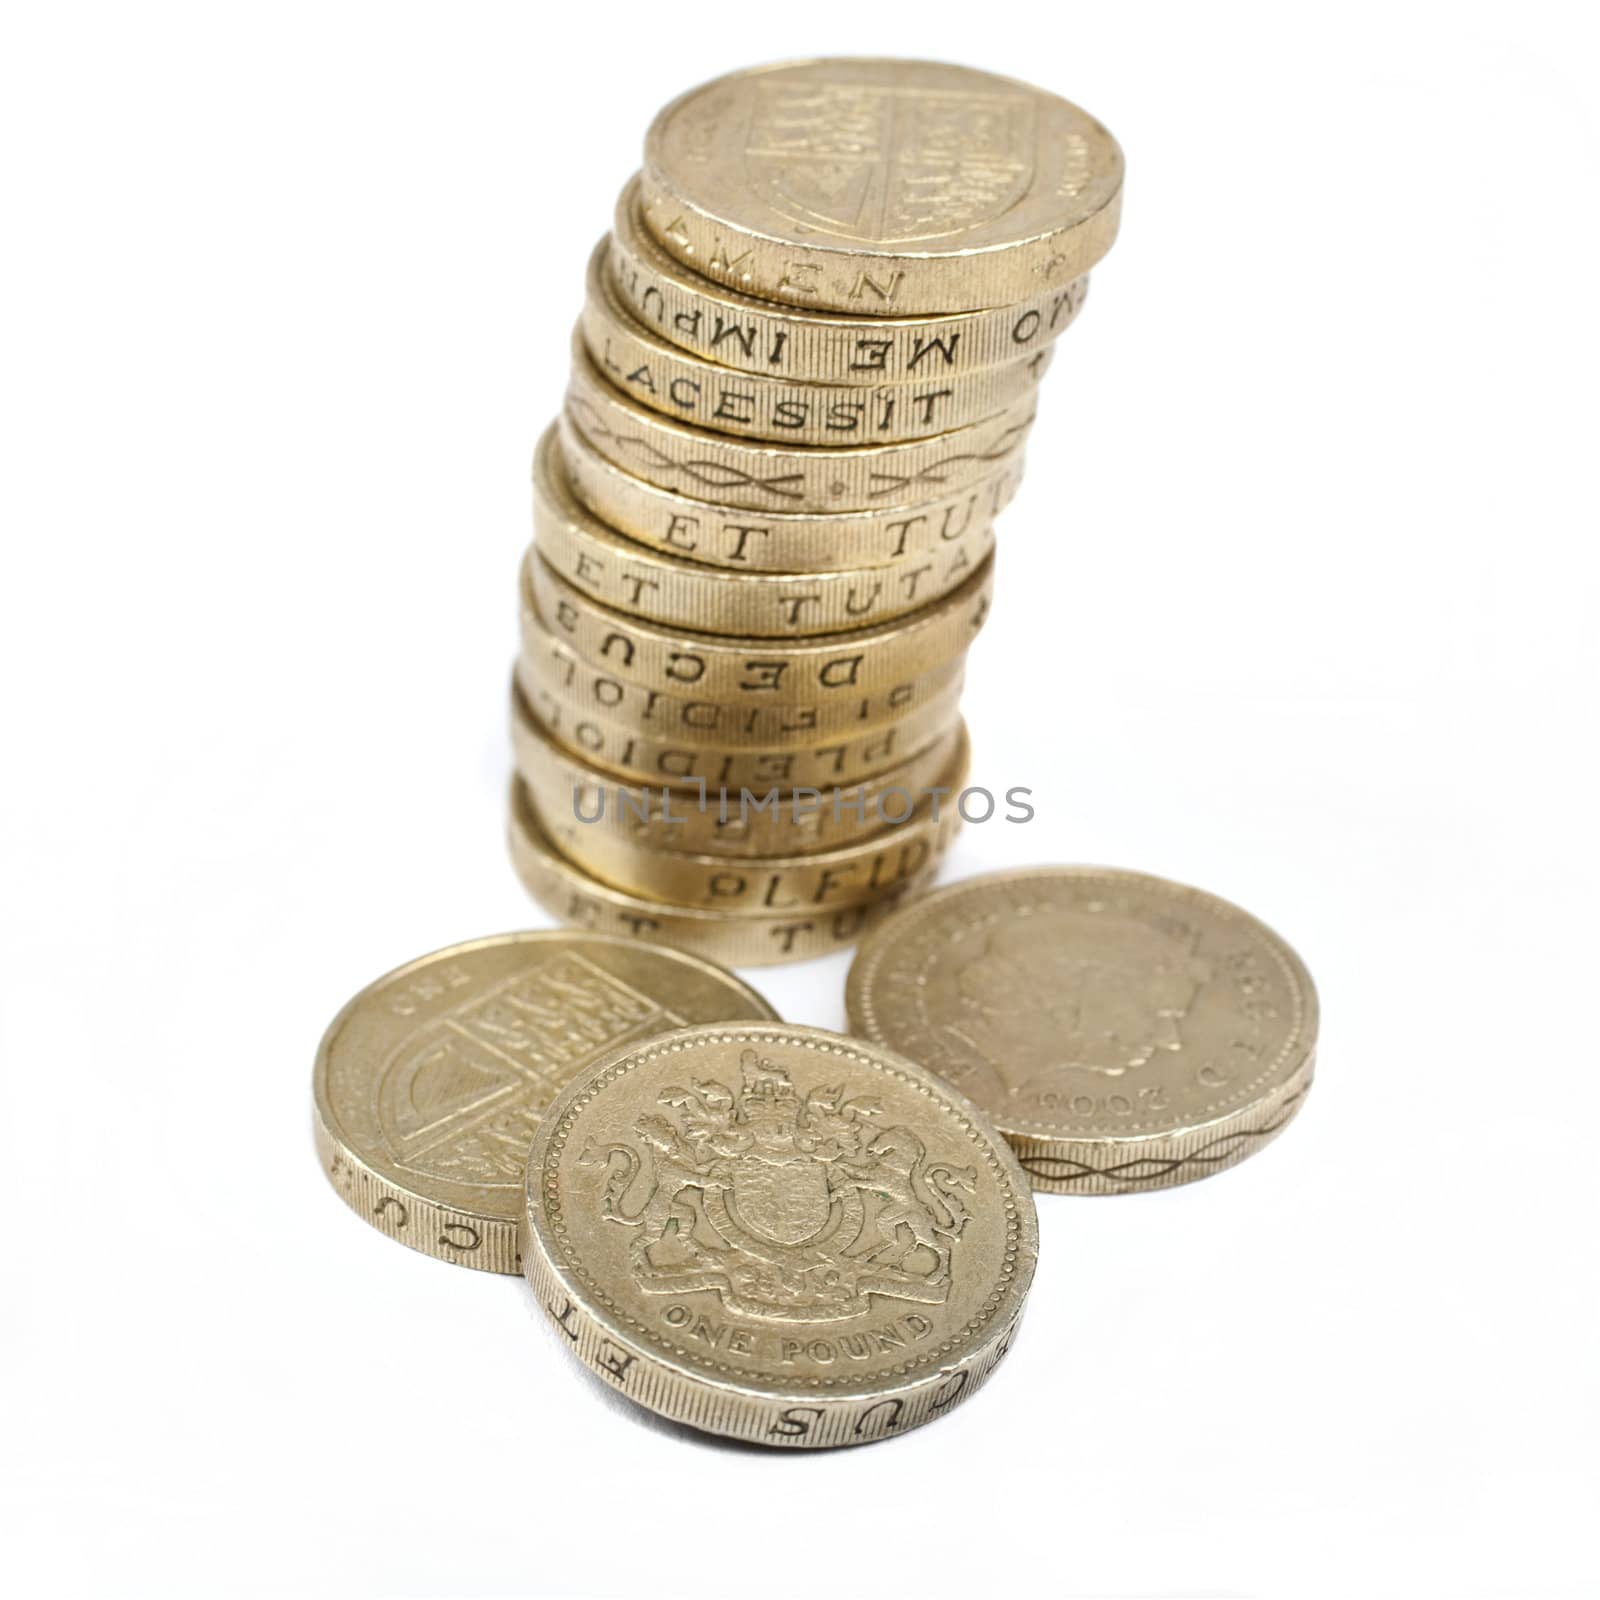 One Pound Coins by chrisdorney